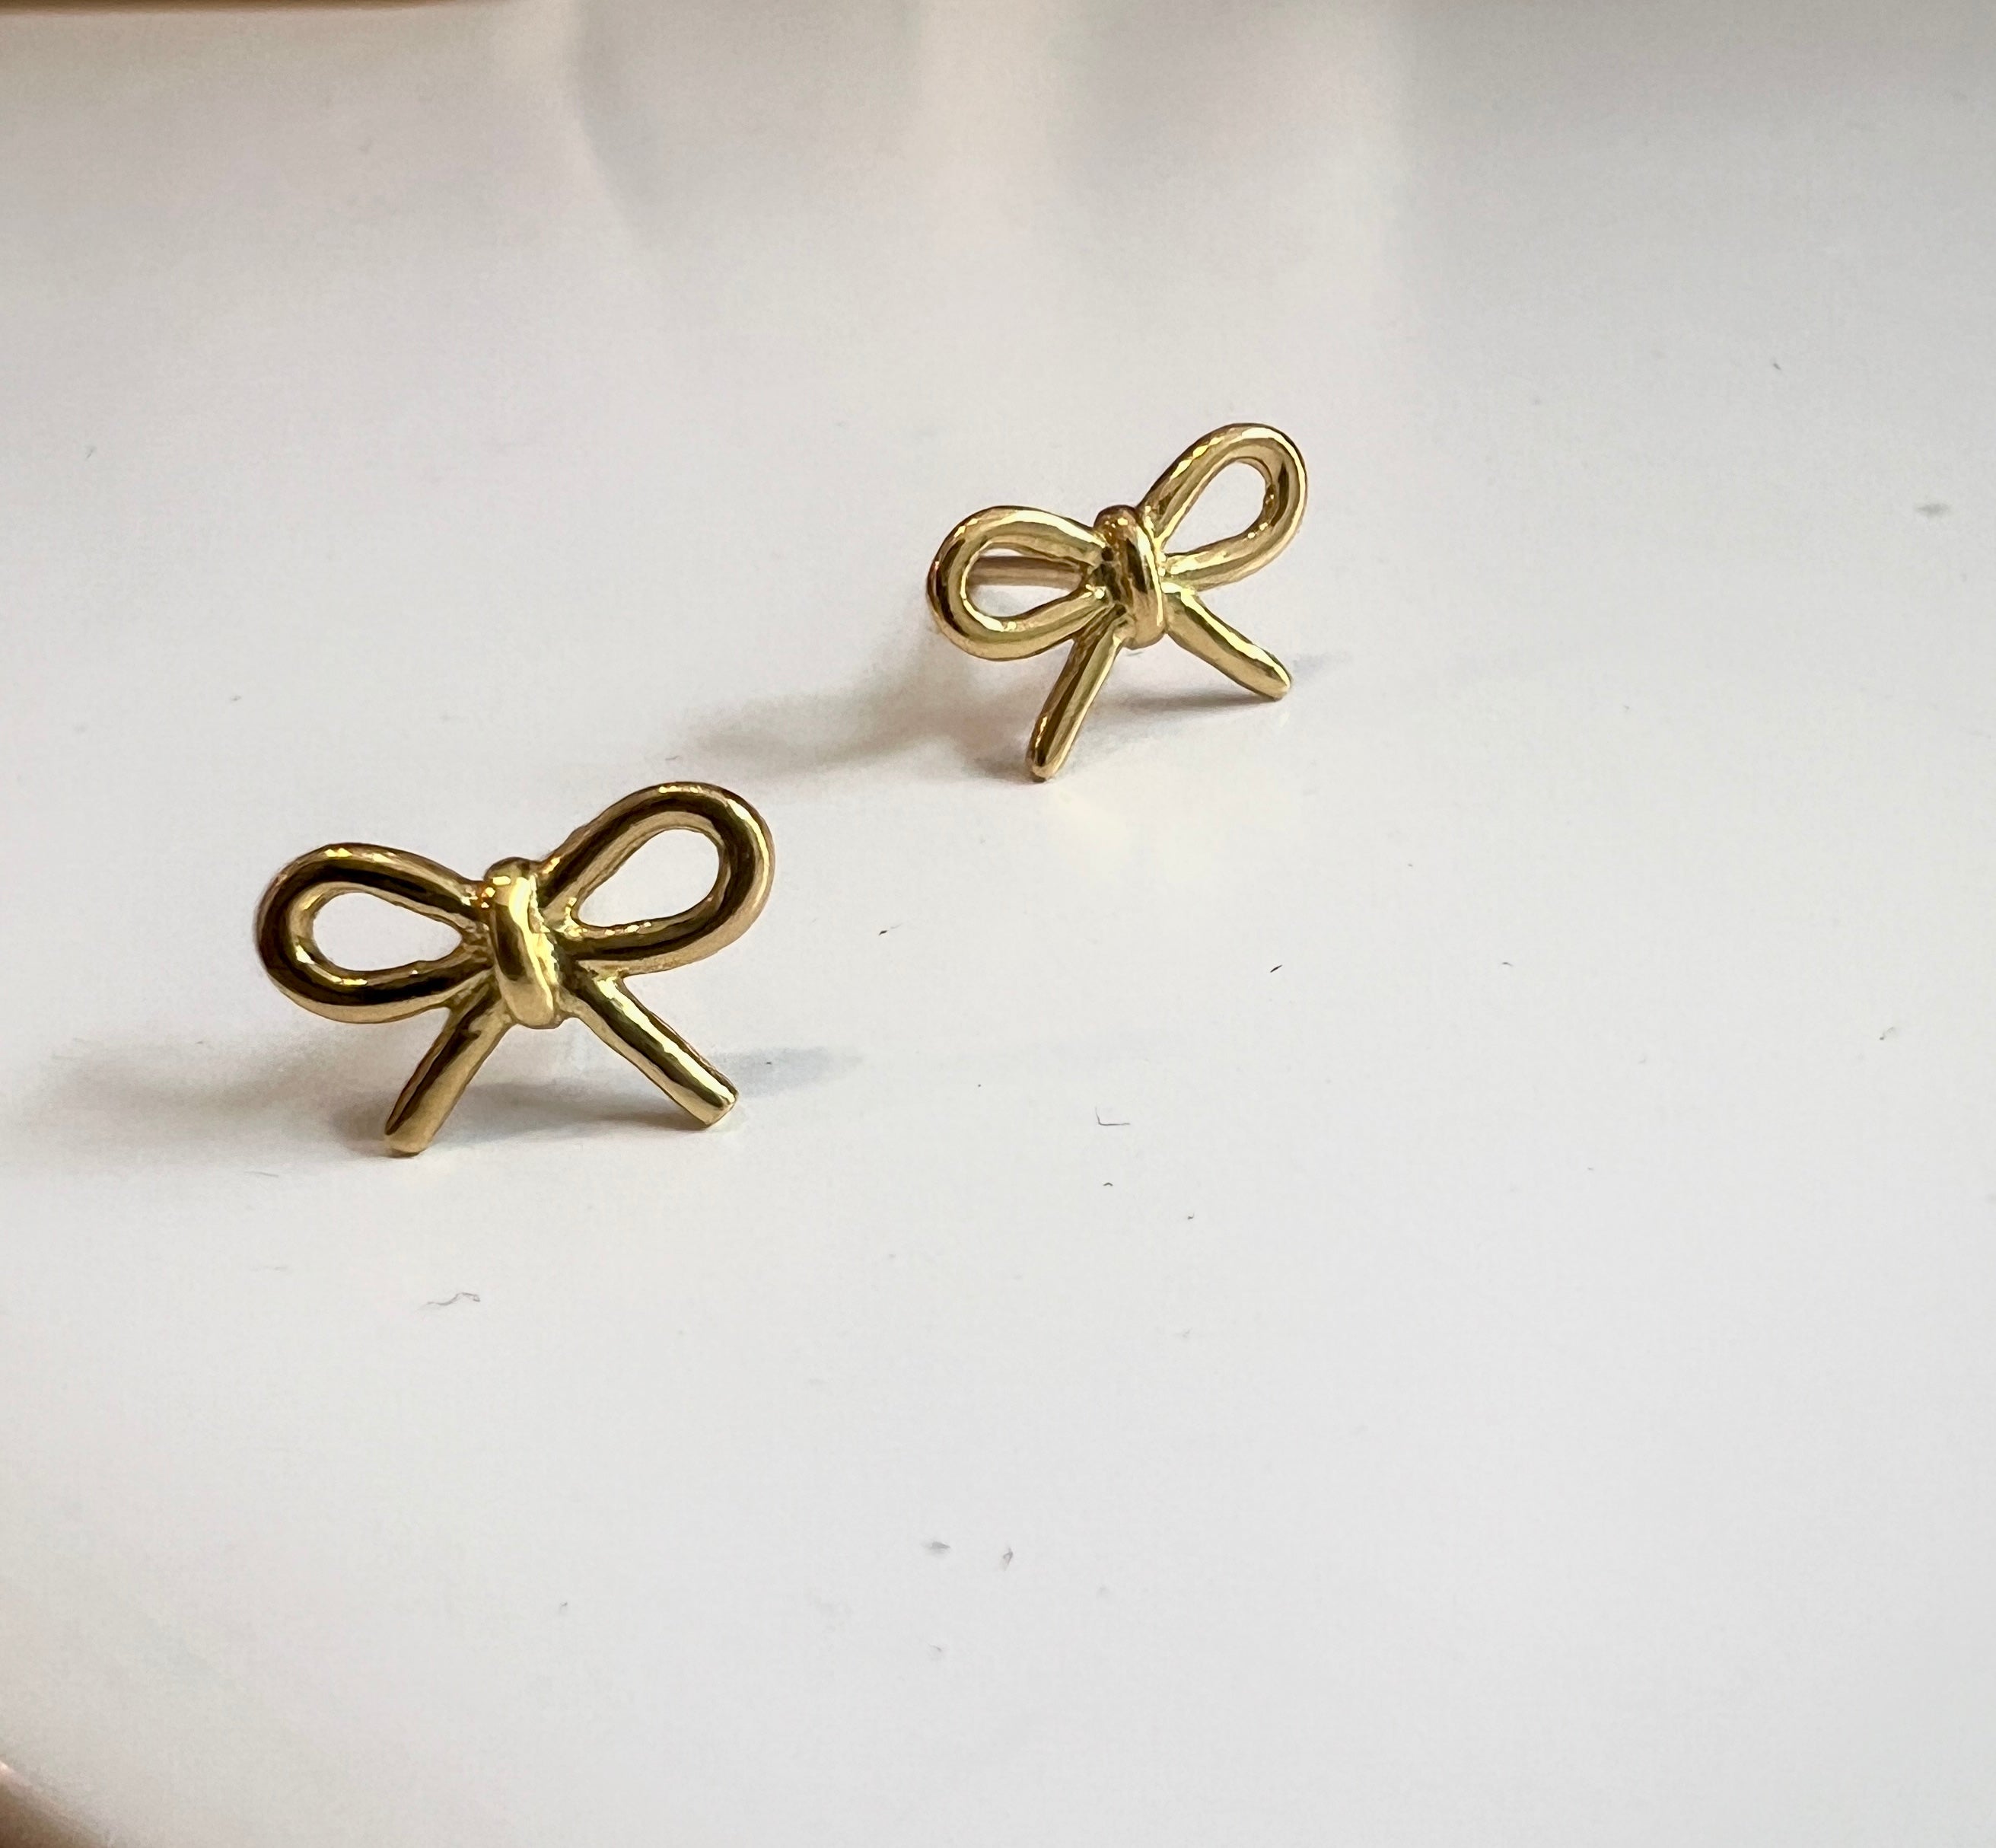 Tiny Bow Stud Earrings